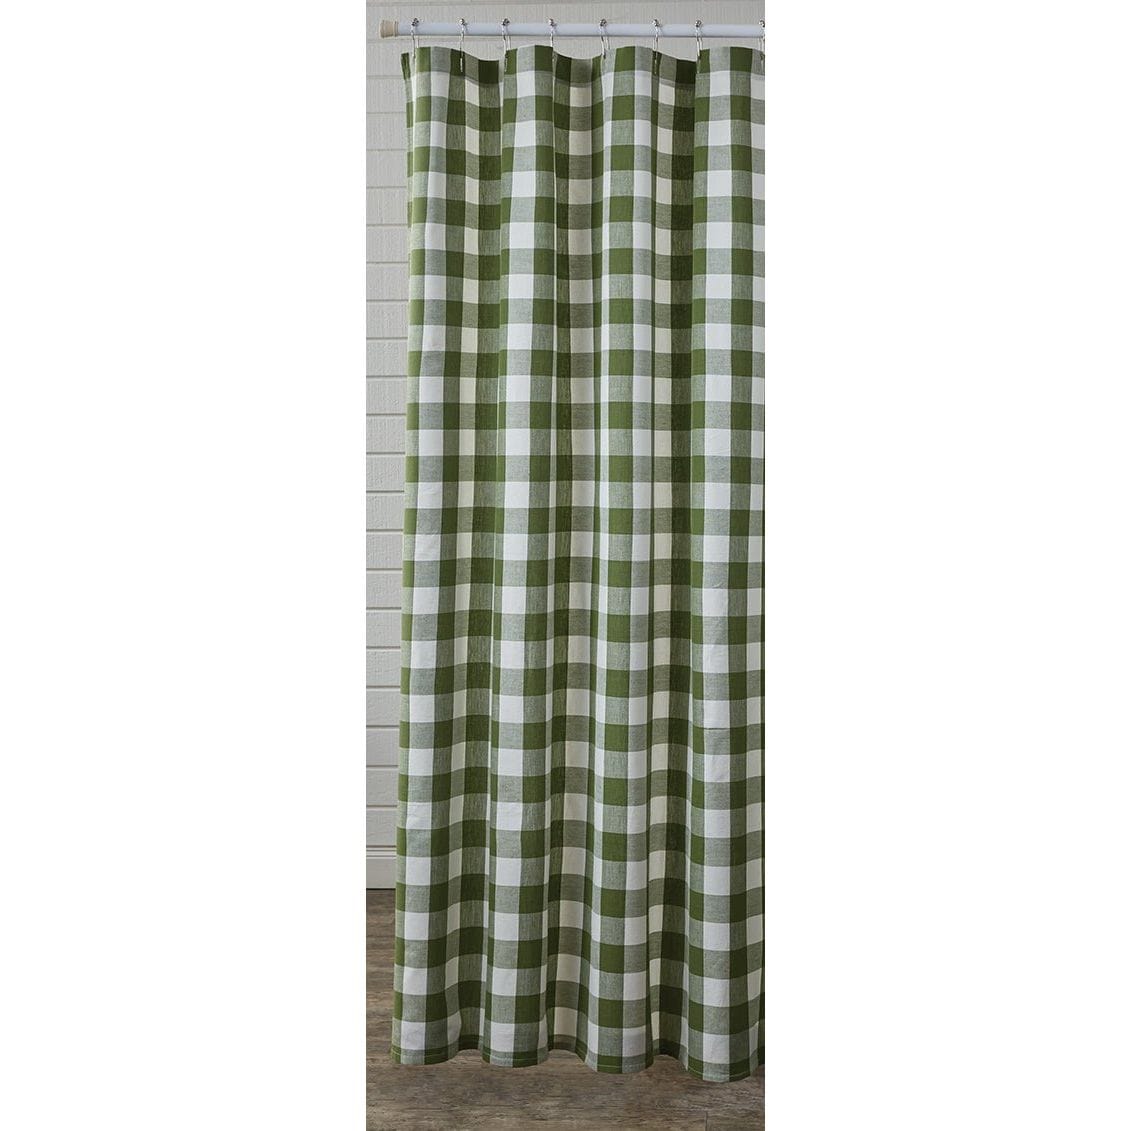 Wicklow Check in Sage Green Shower Curtain-Park Designs-The Village Merchant